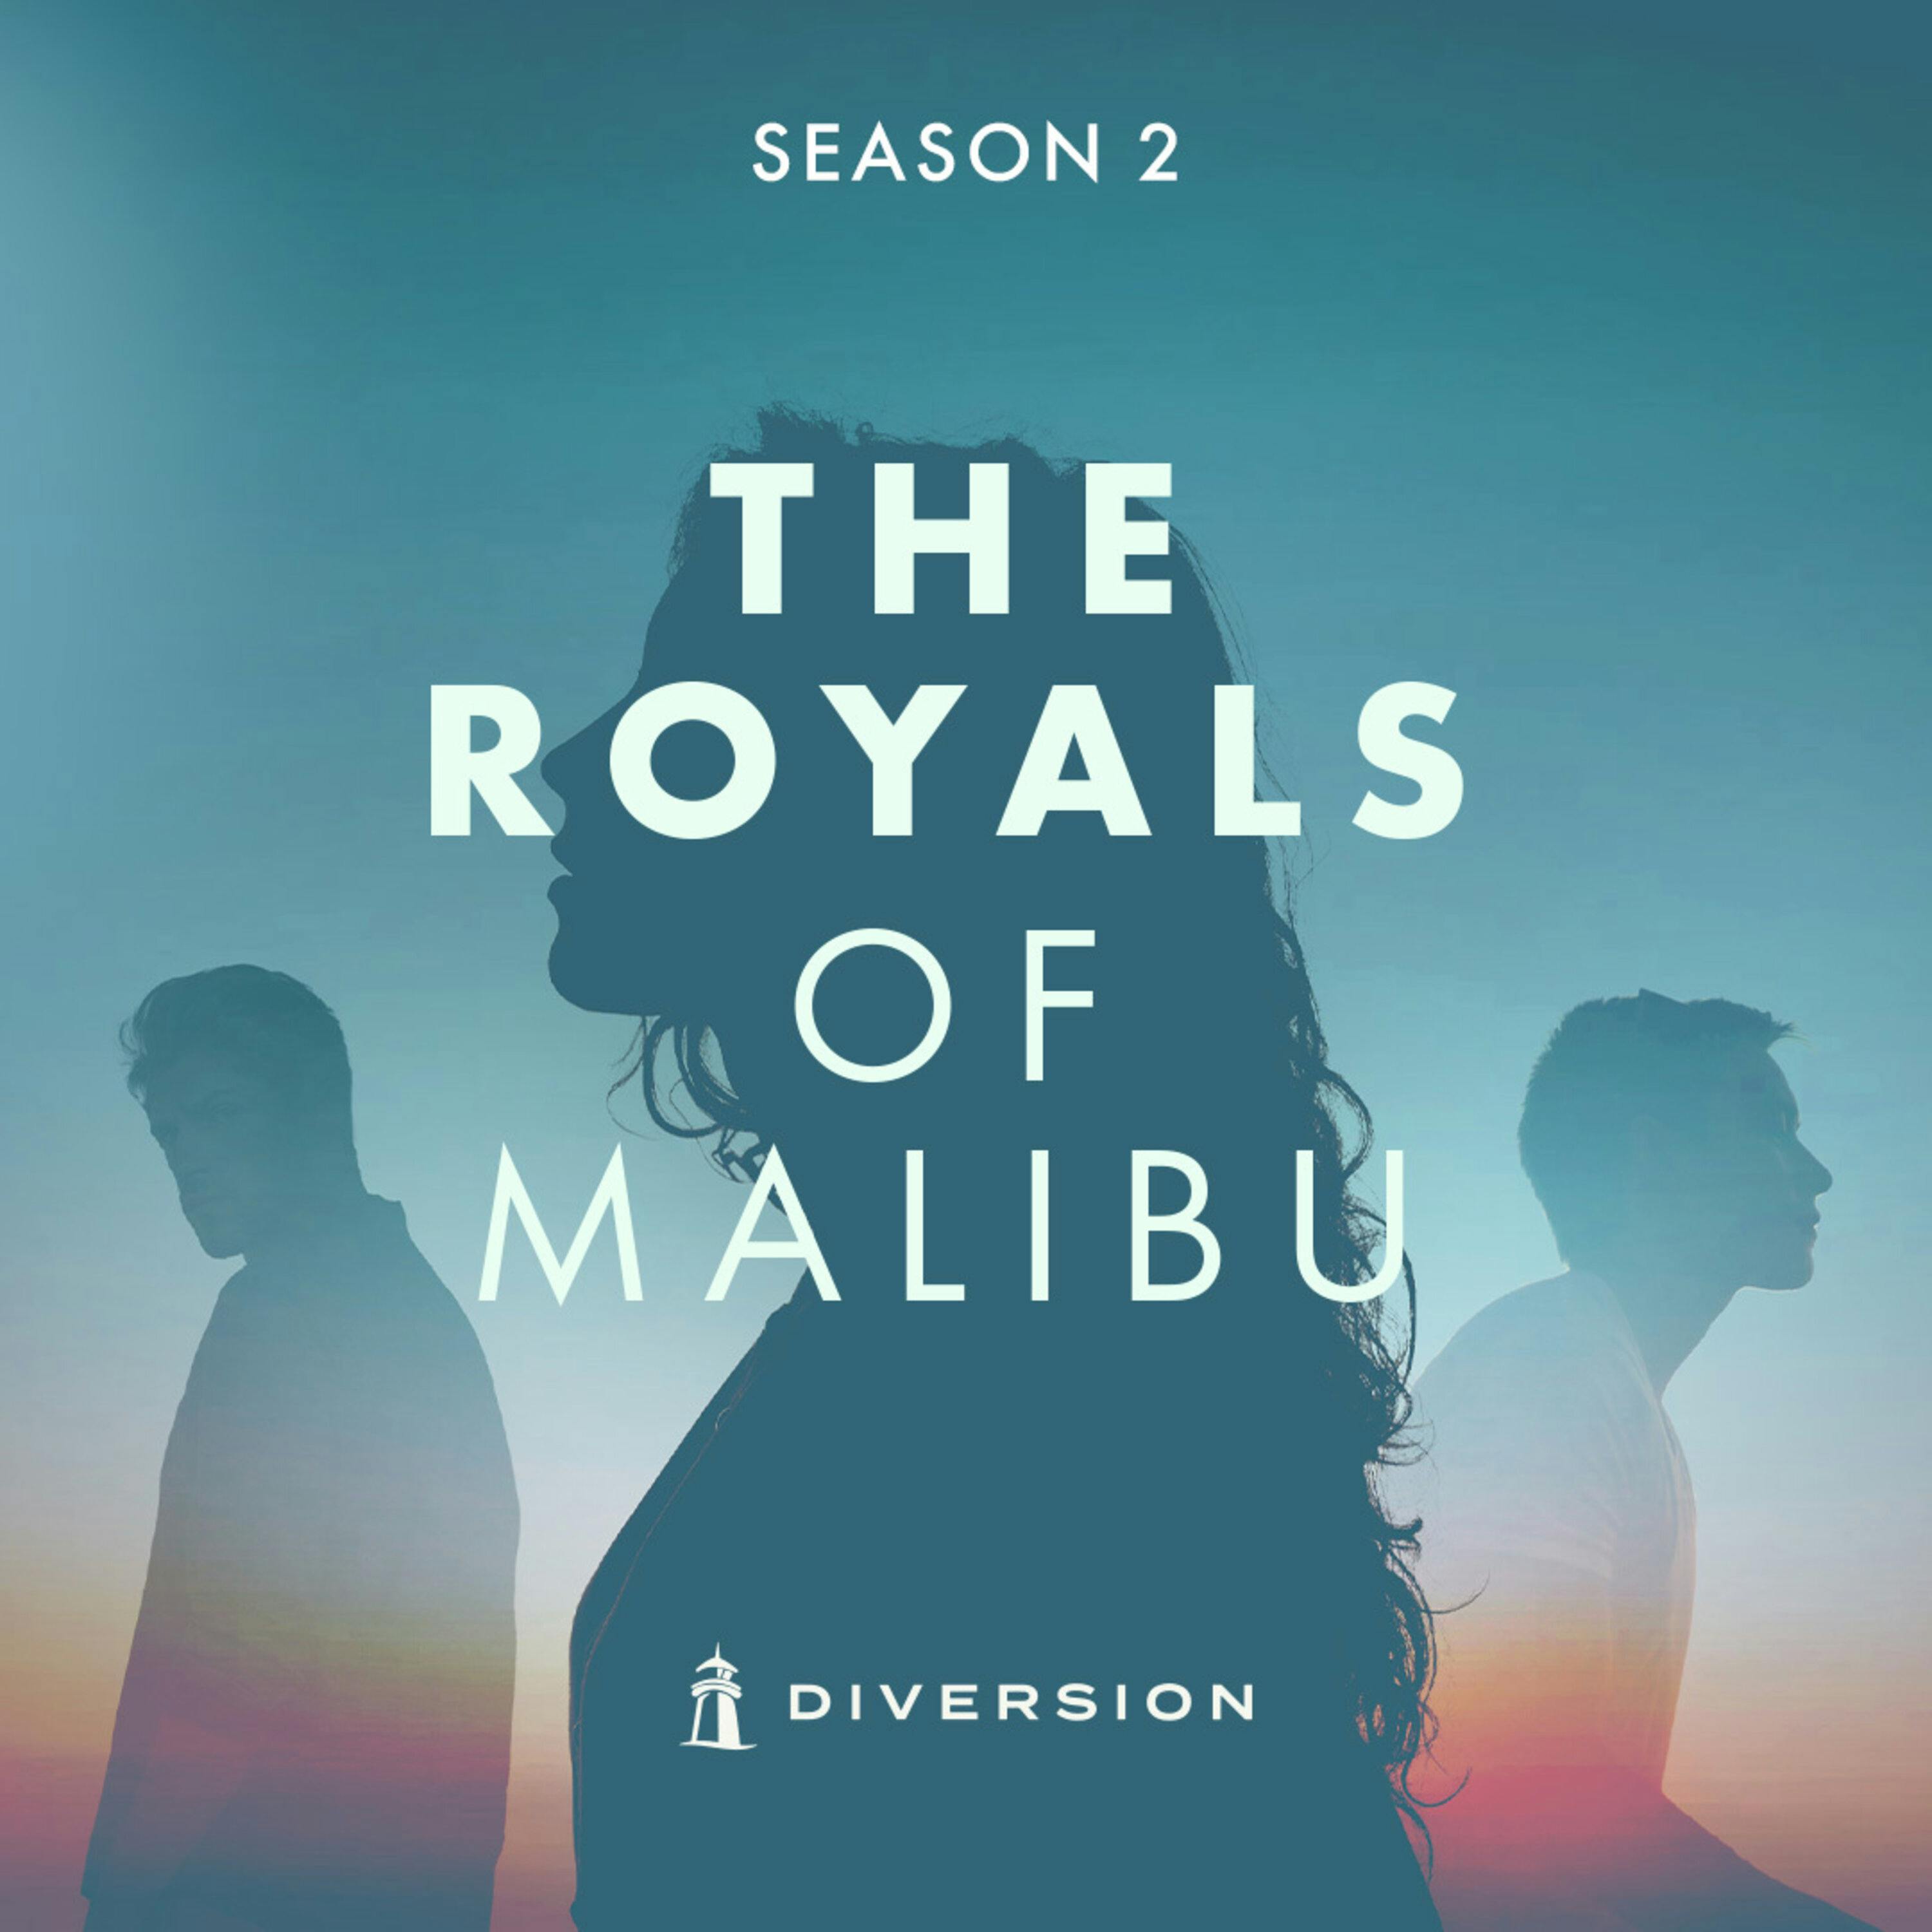 The Royals of Malibu podcast show image